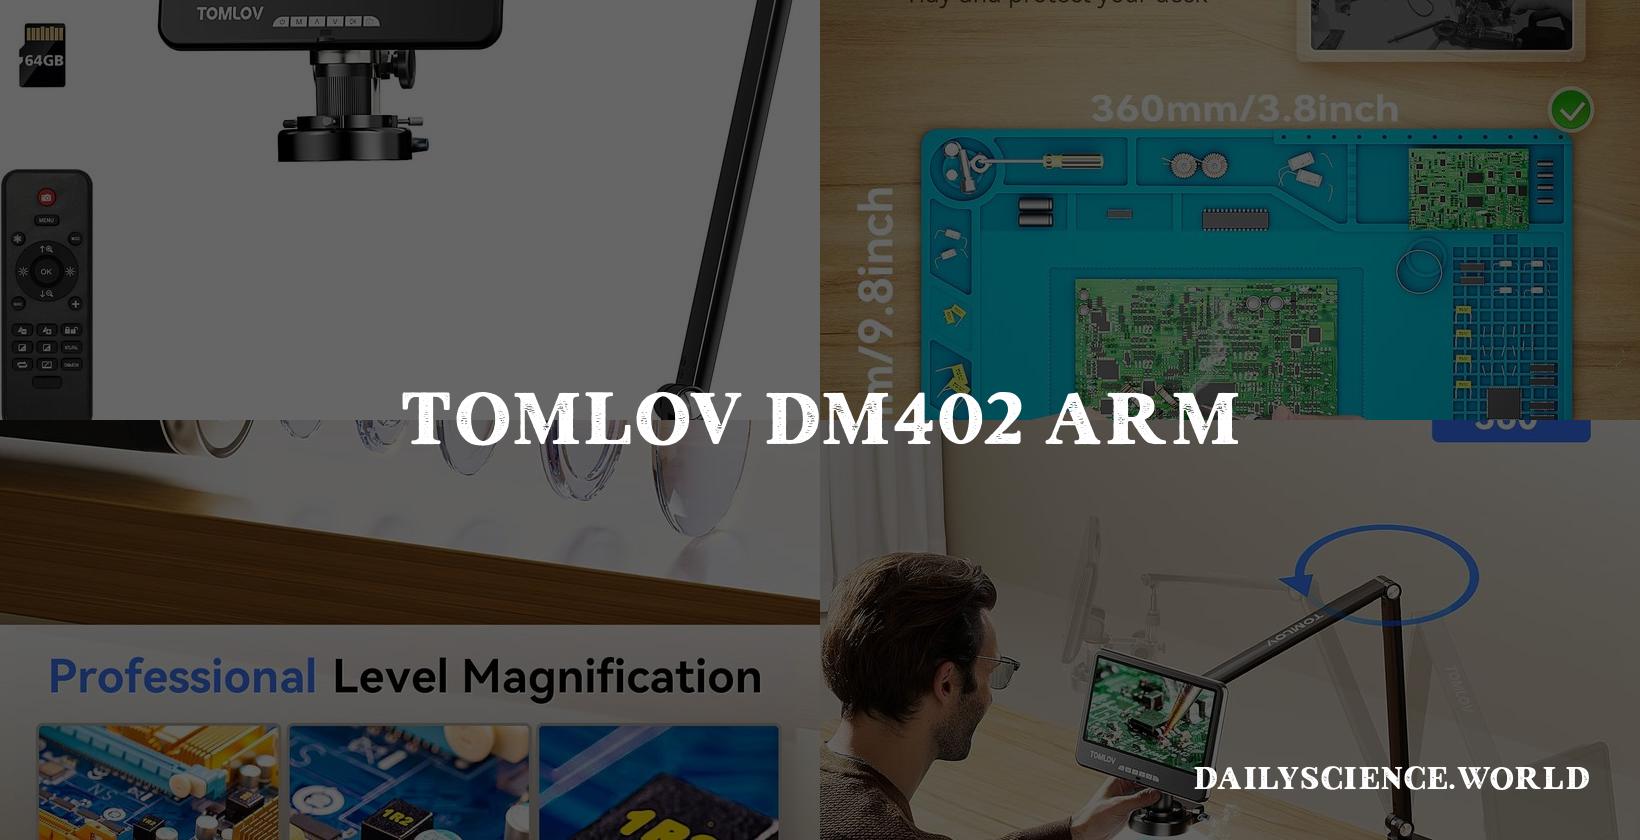 TOMLOV DM402 Arm Digital Microscope